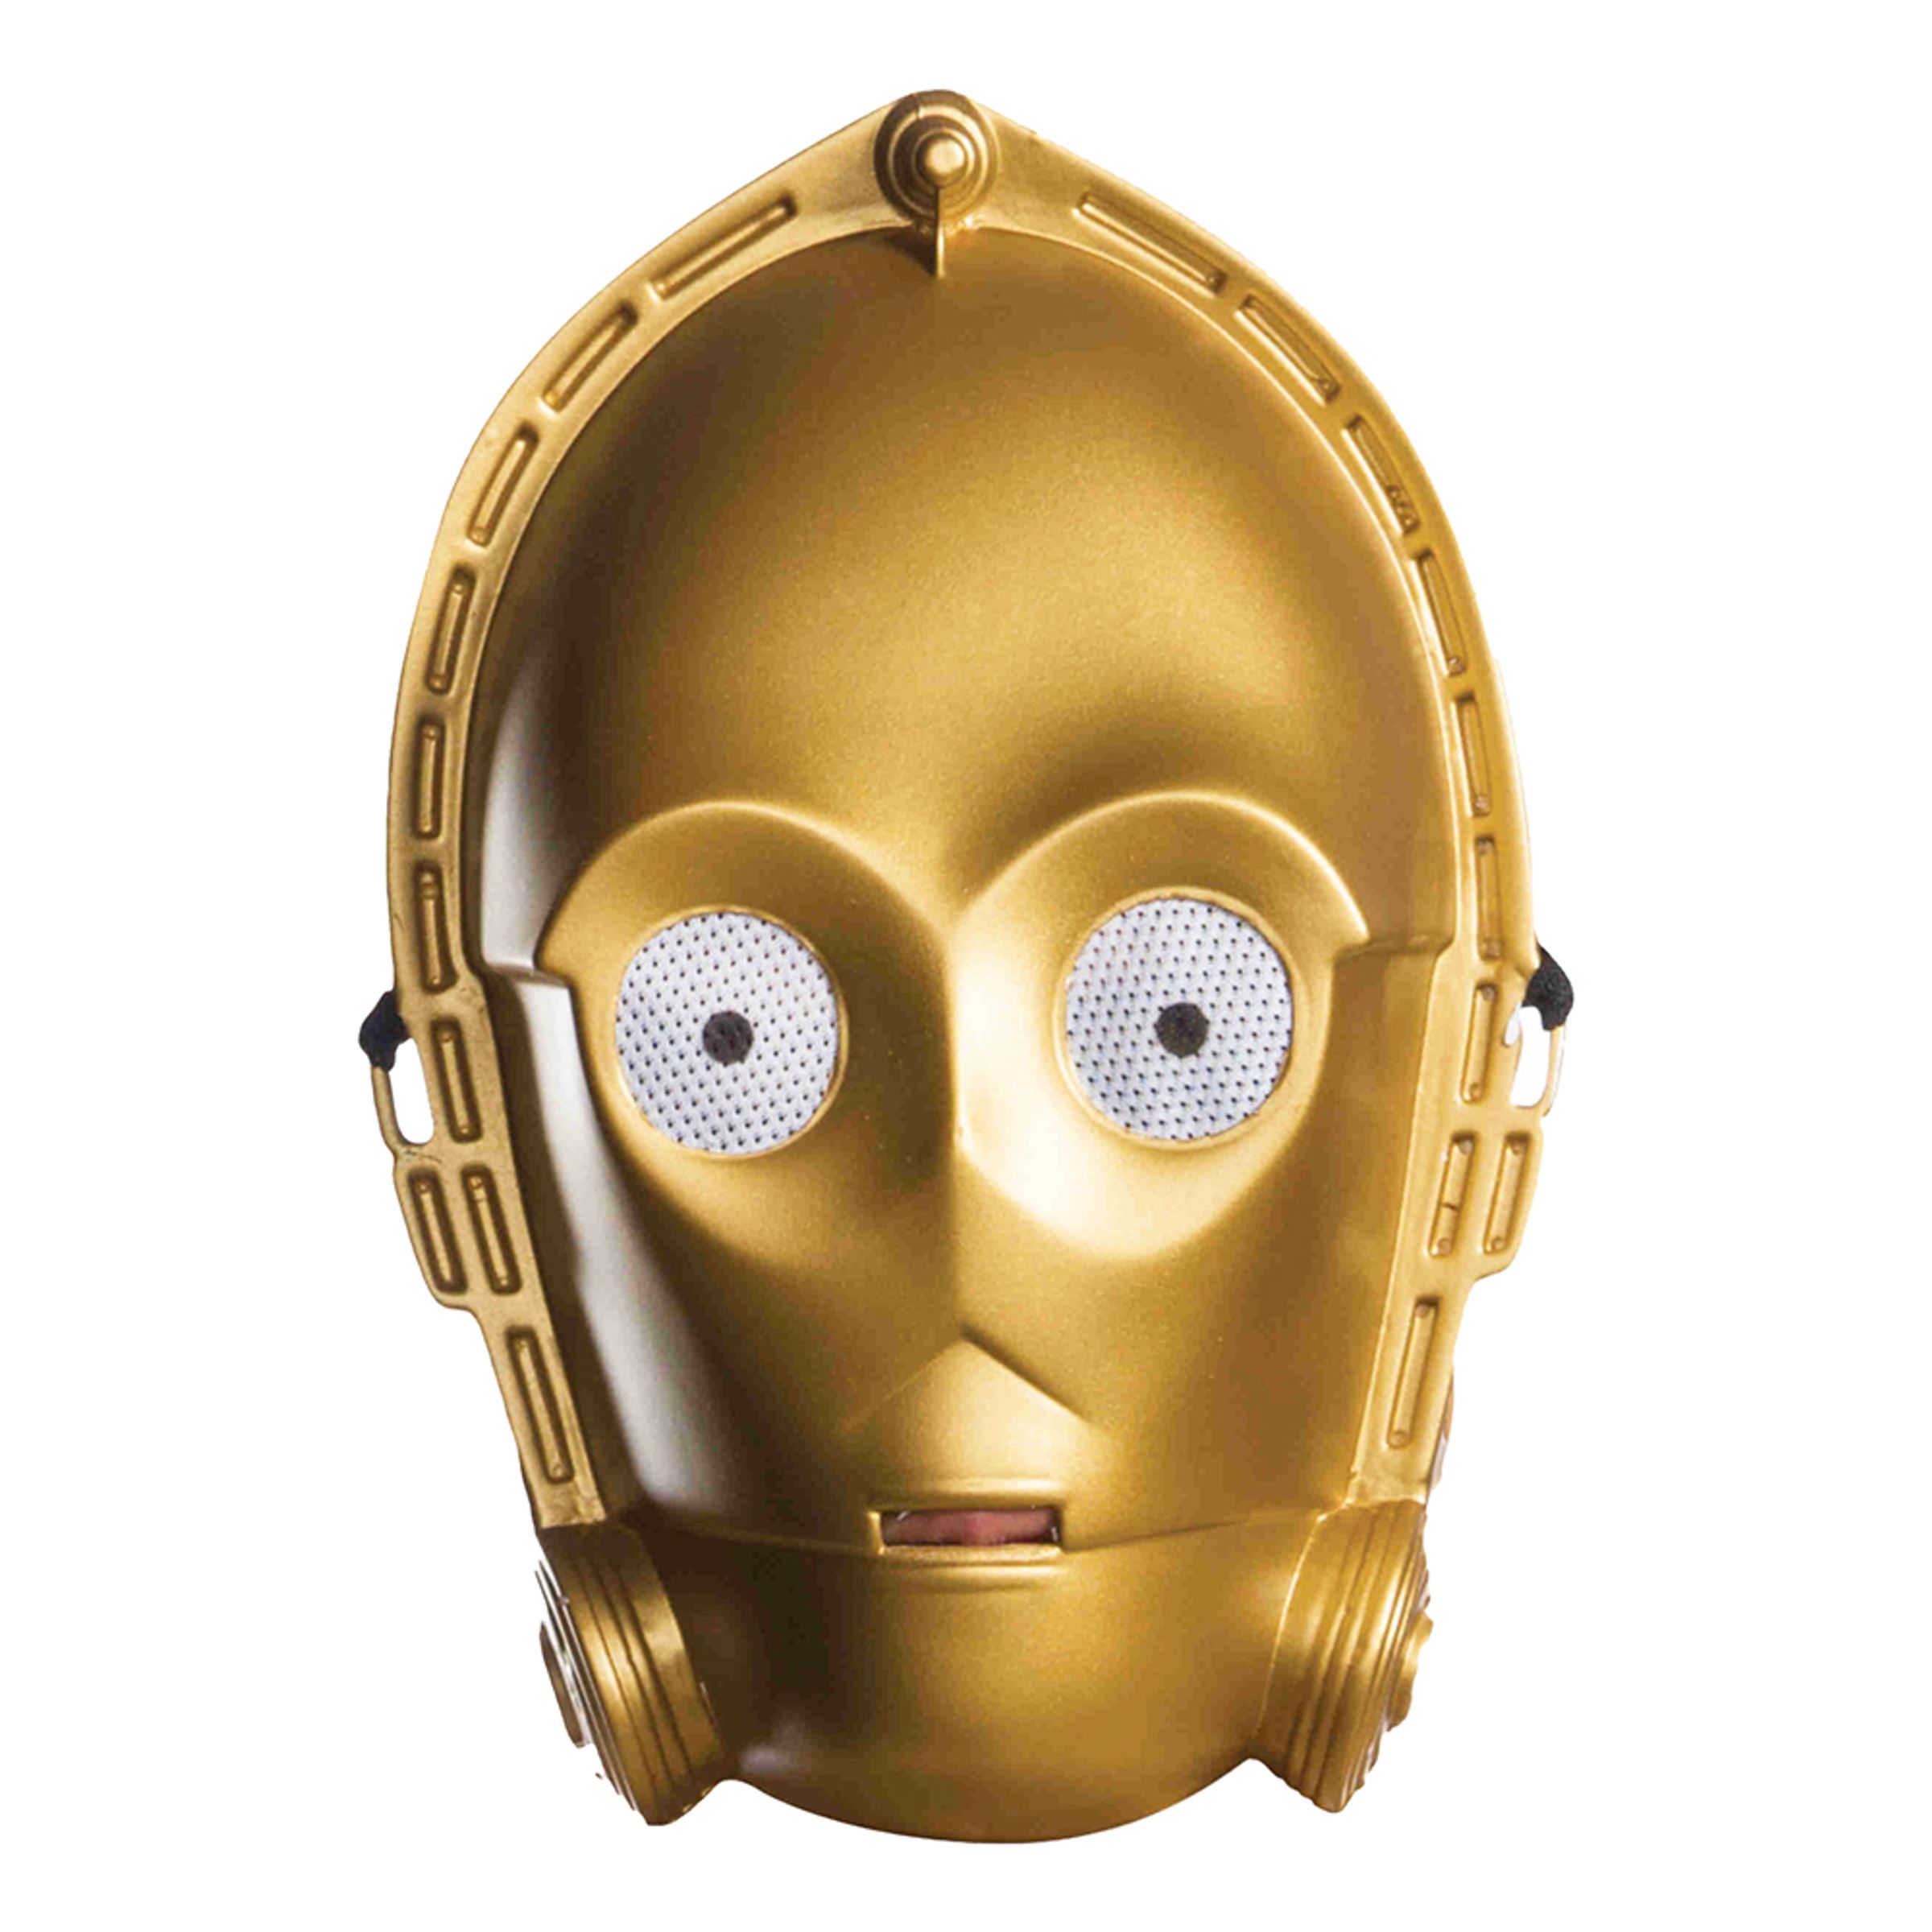 Star Wars C-3PO Mask - One size